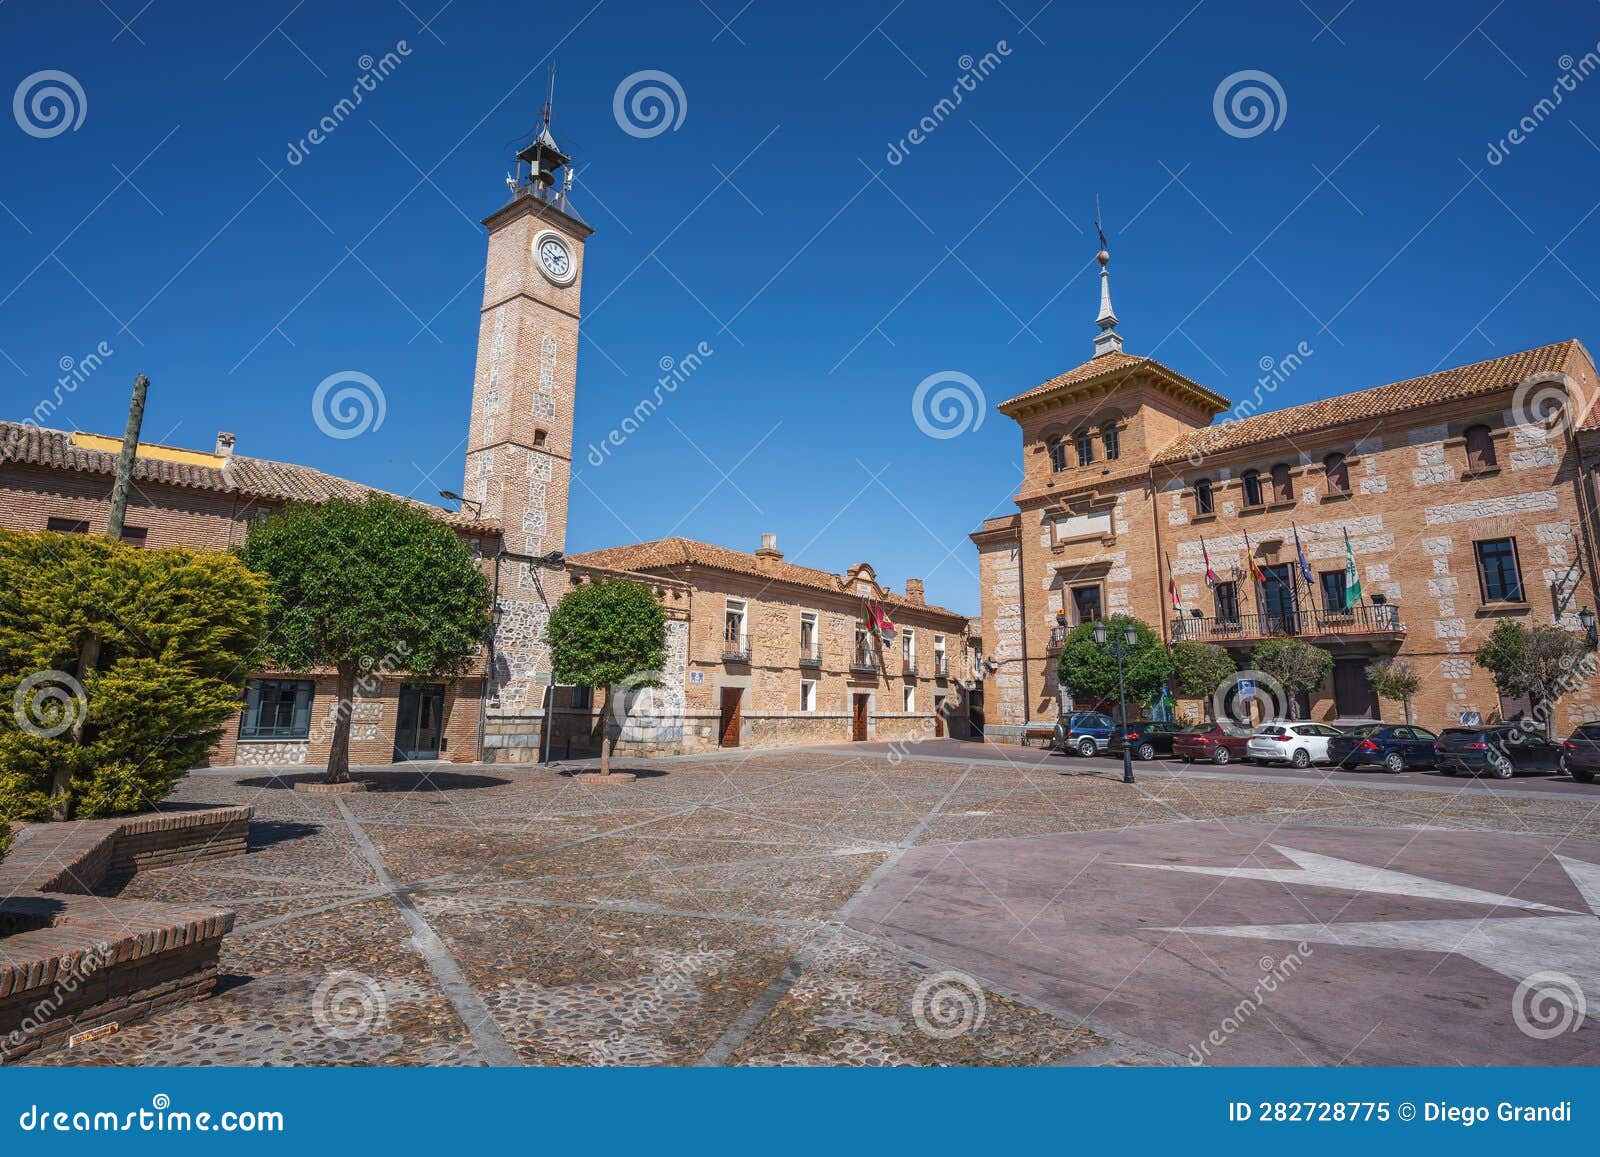 plaza de espana square with clock tower and consuegra city hall - consuegra, castilla-la mancha, spain